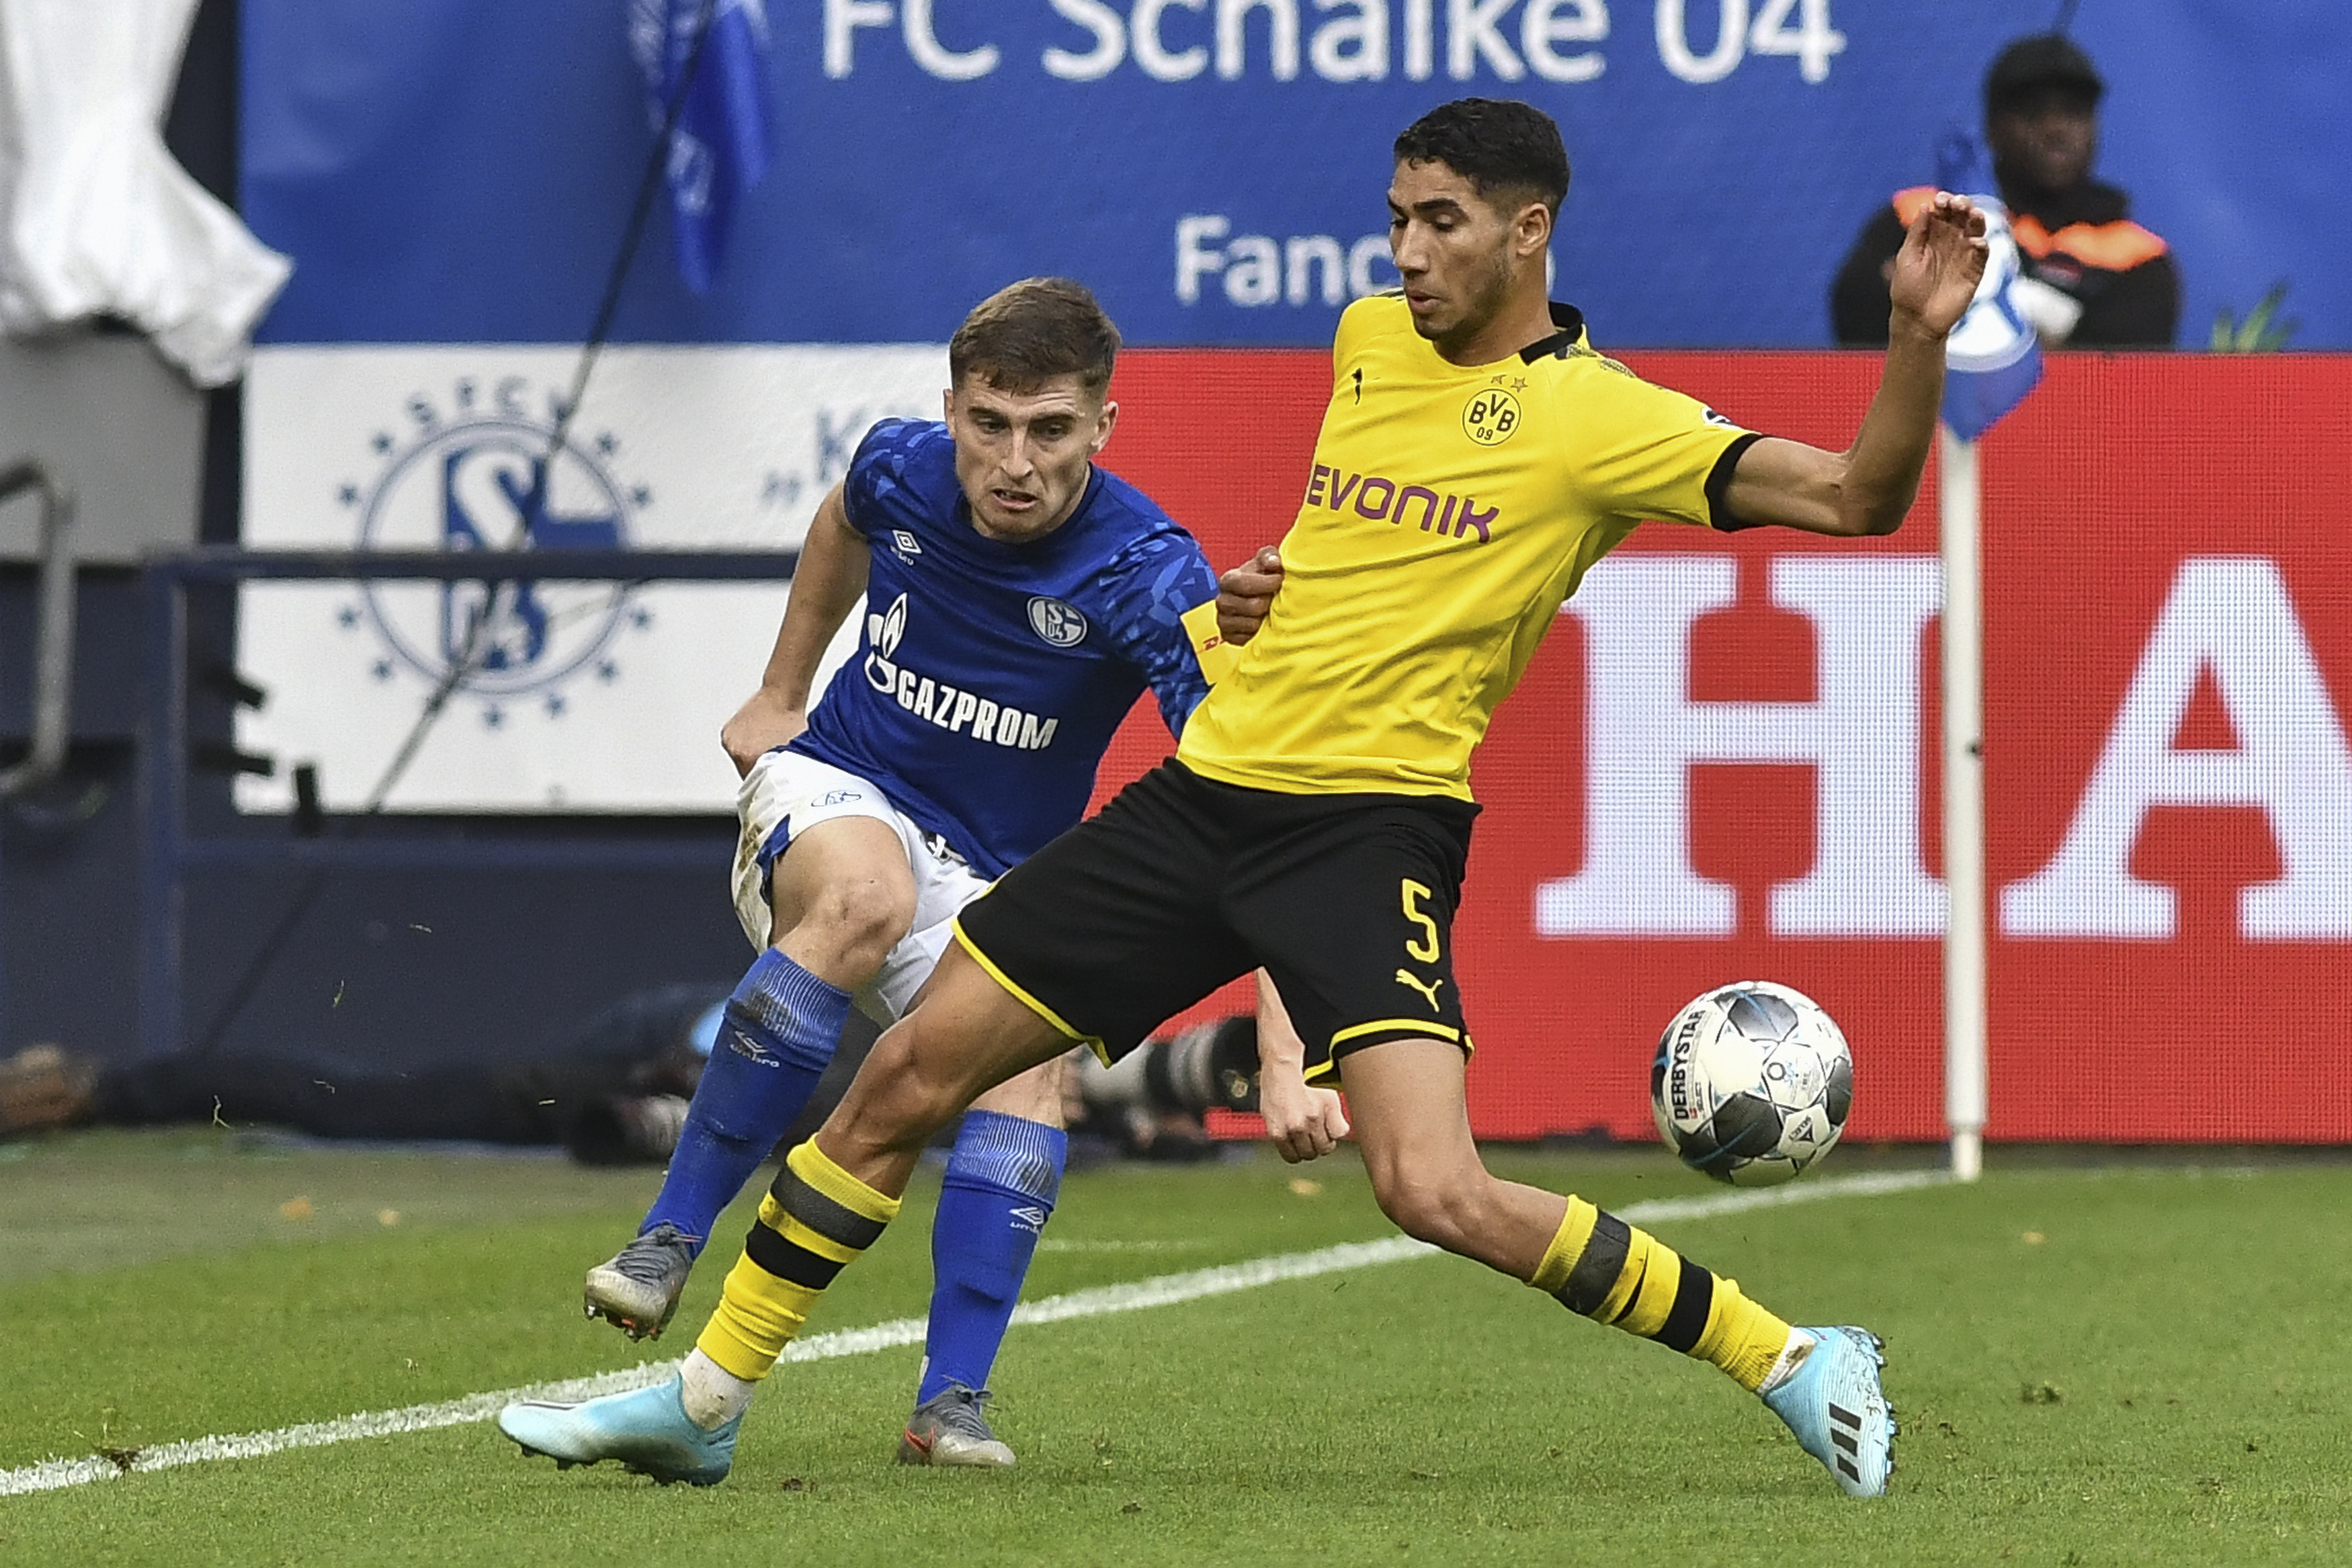 BVB (Borussia Dortmund) gegen FC Schalke 04 TV, Livestream, Highlights, Tabelle